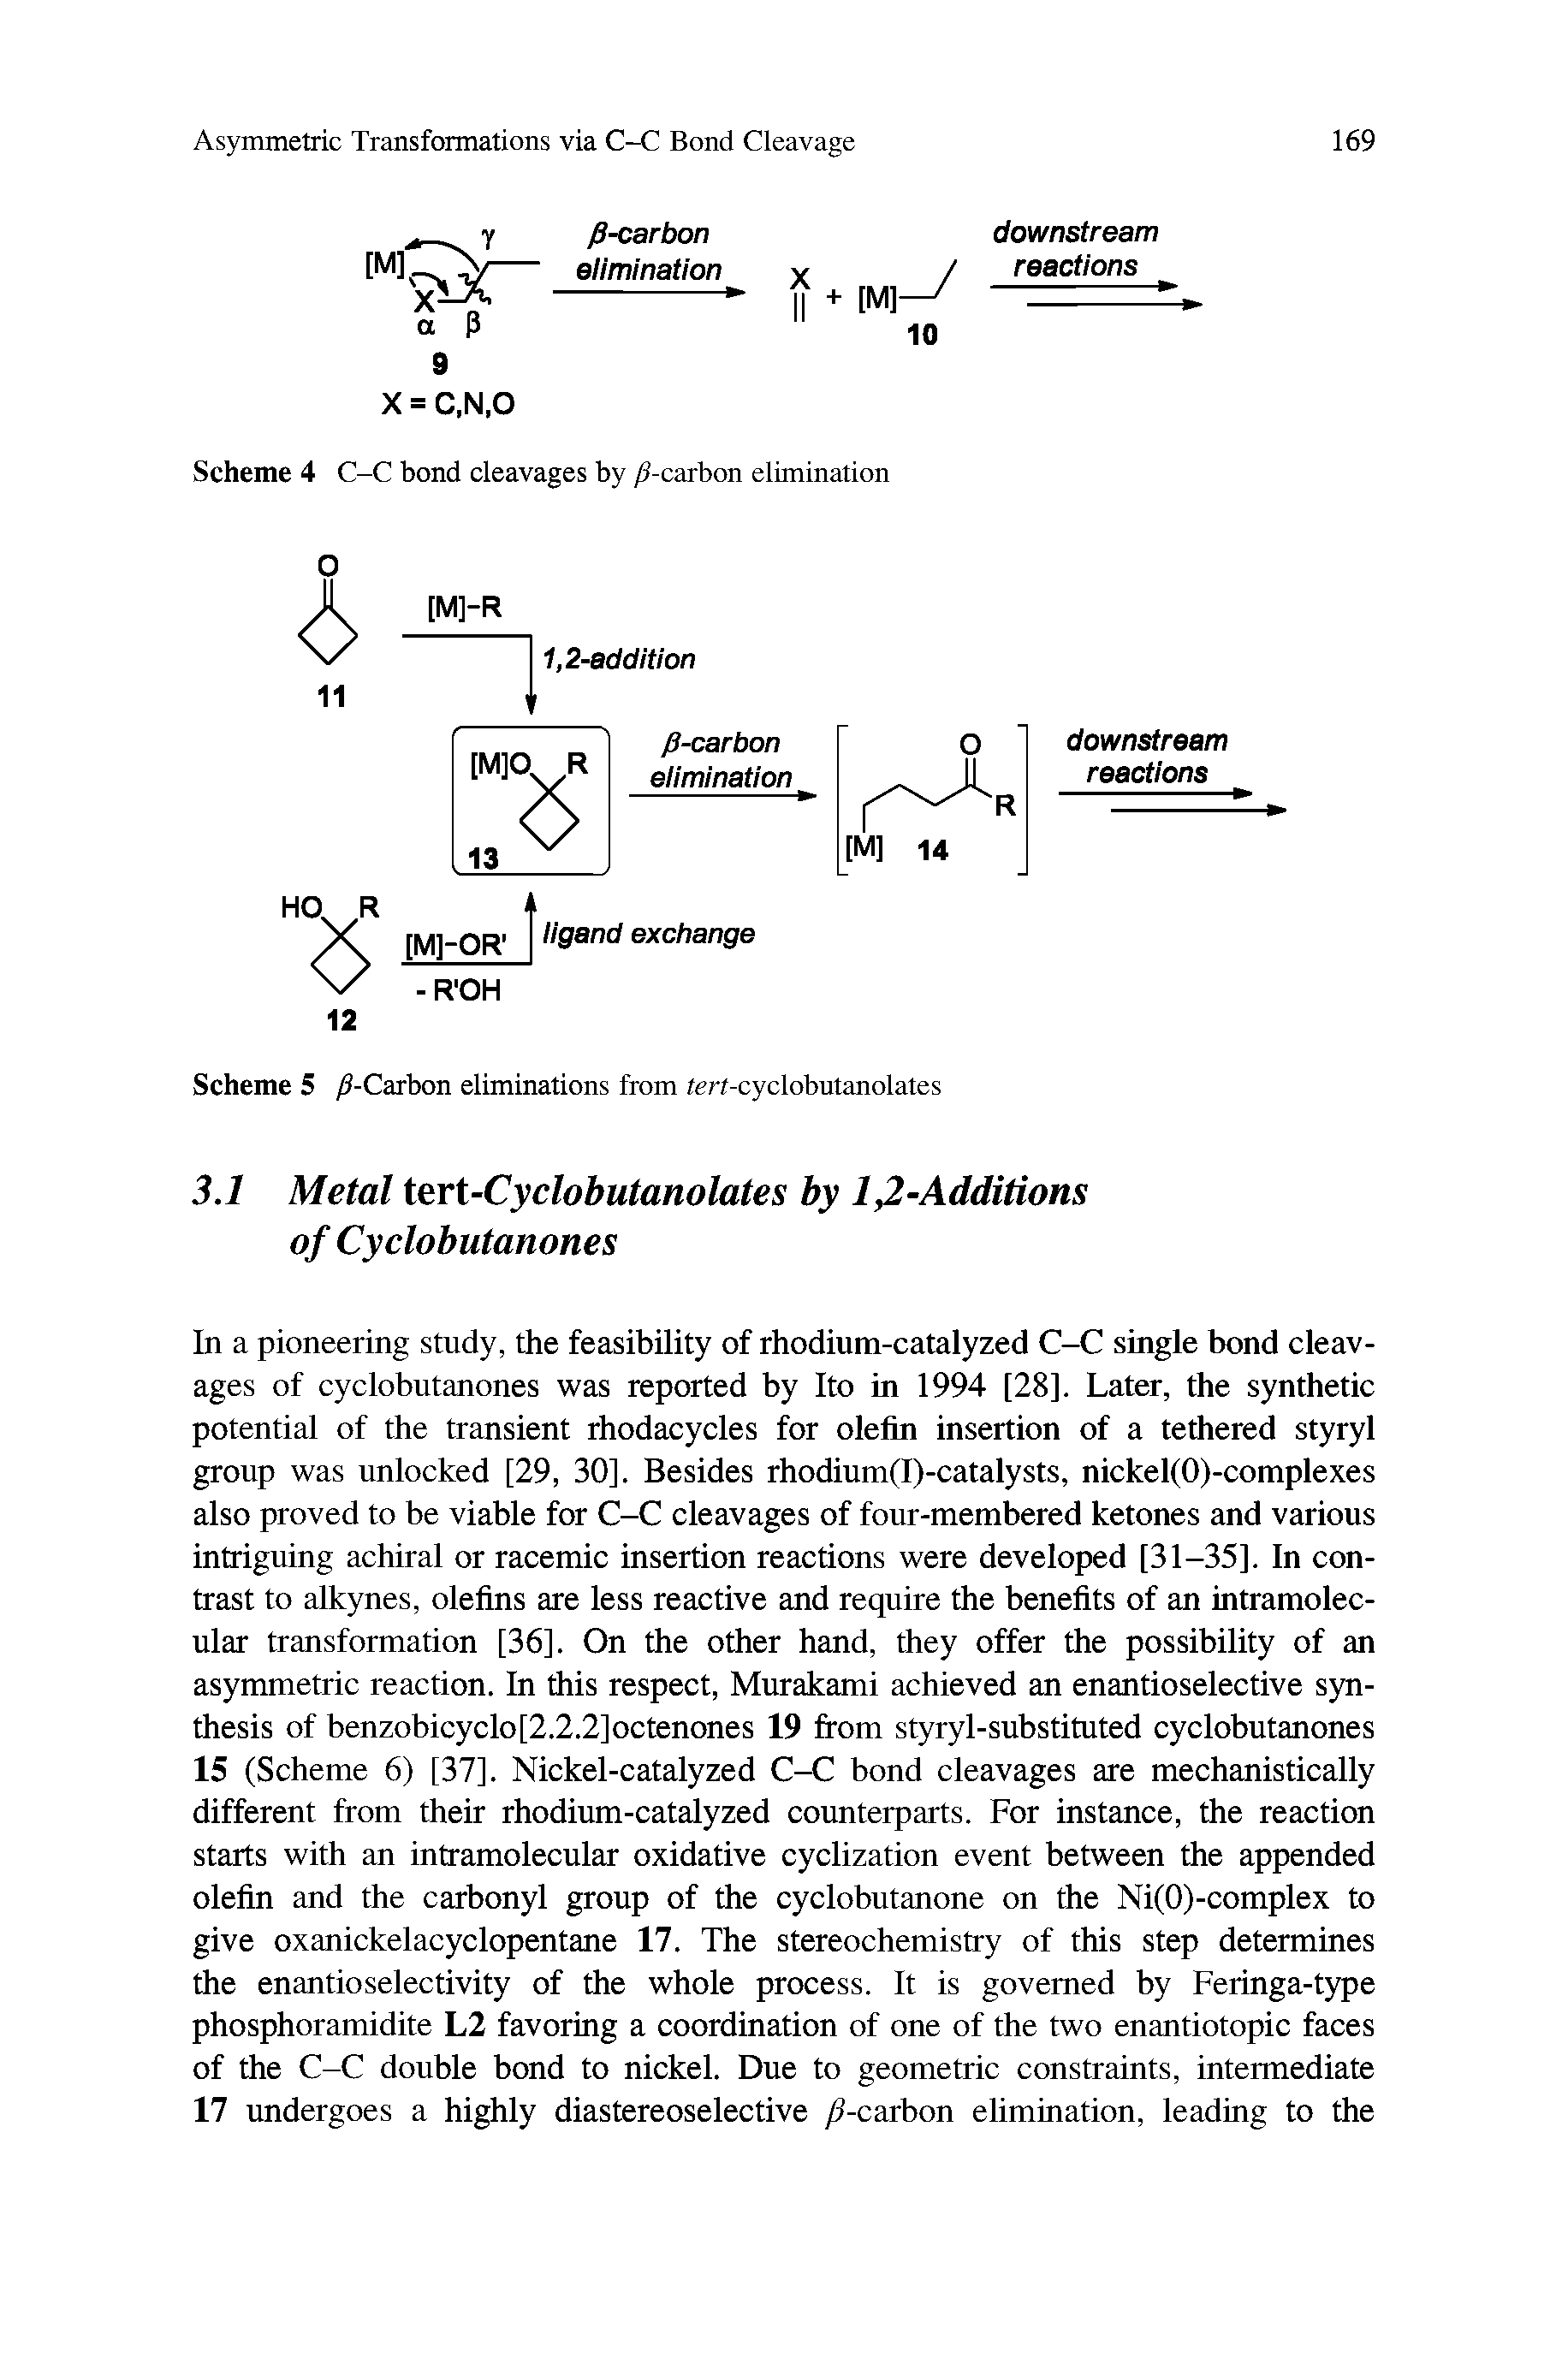 Scheme 5 -Carbon eliminations from tert-cyclobutanolates...